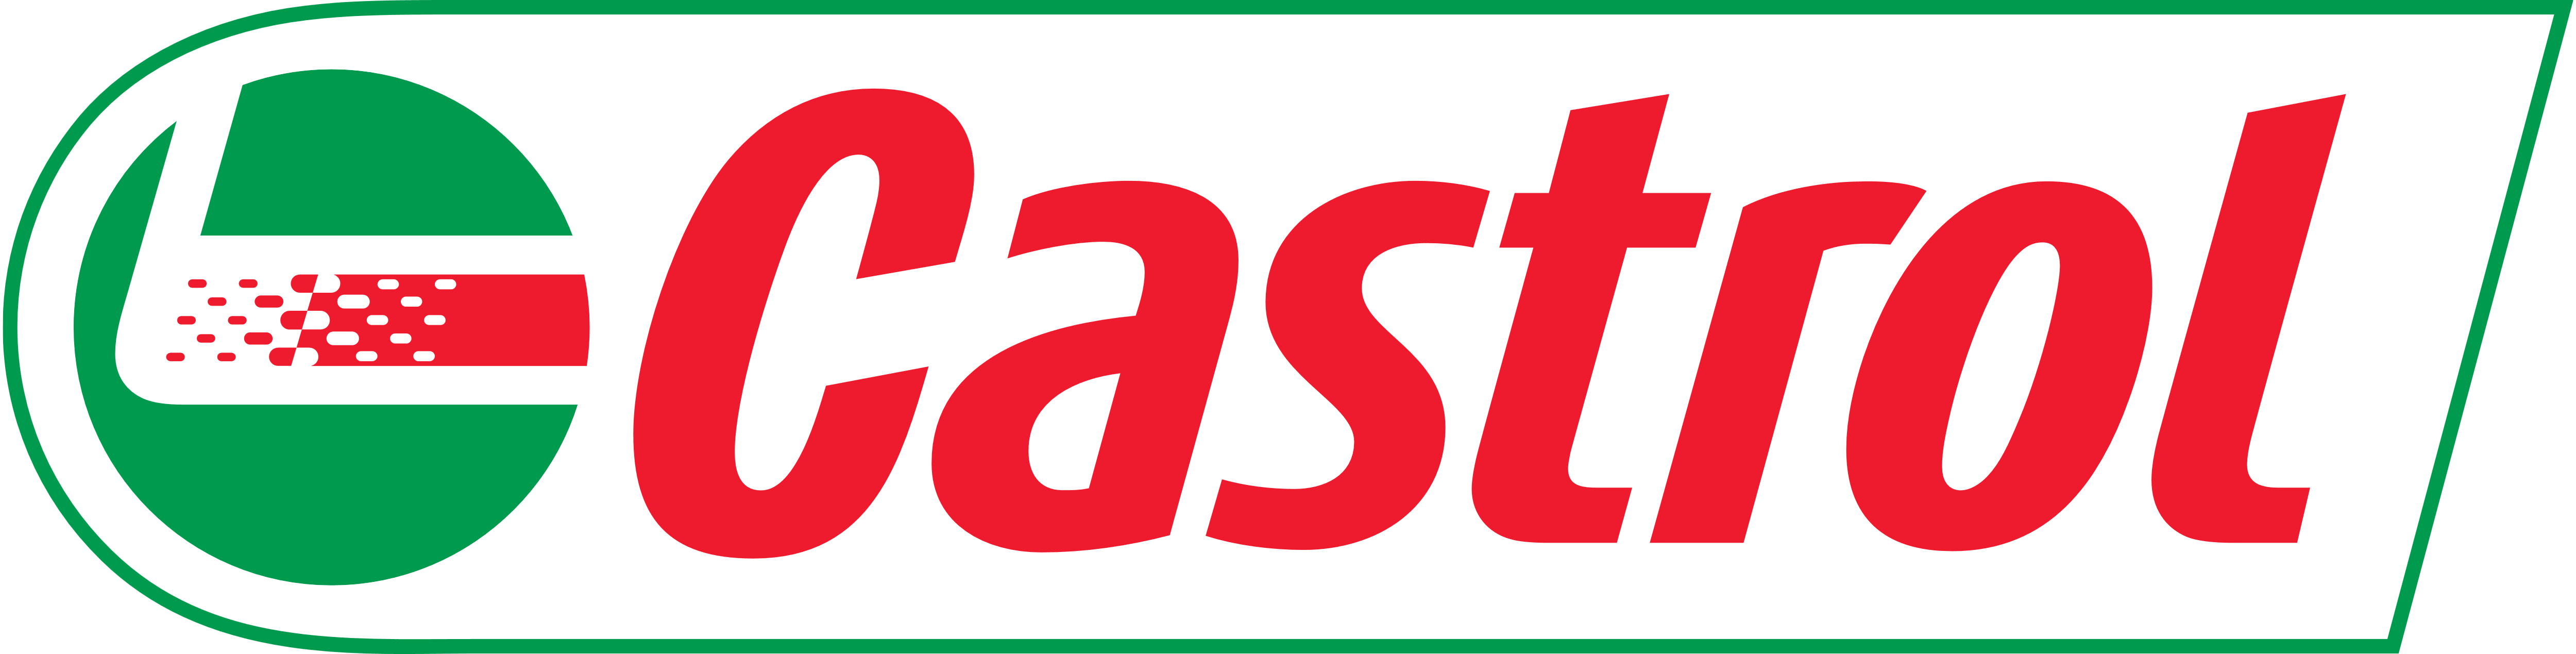 marketing strategy of castrol - castrol logo